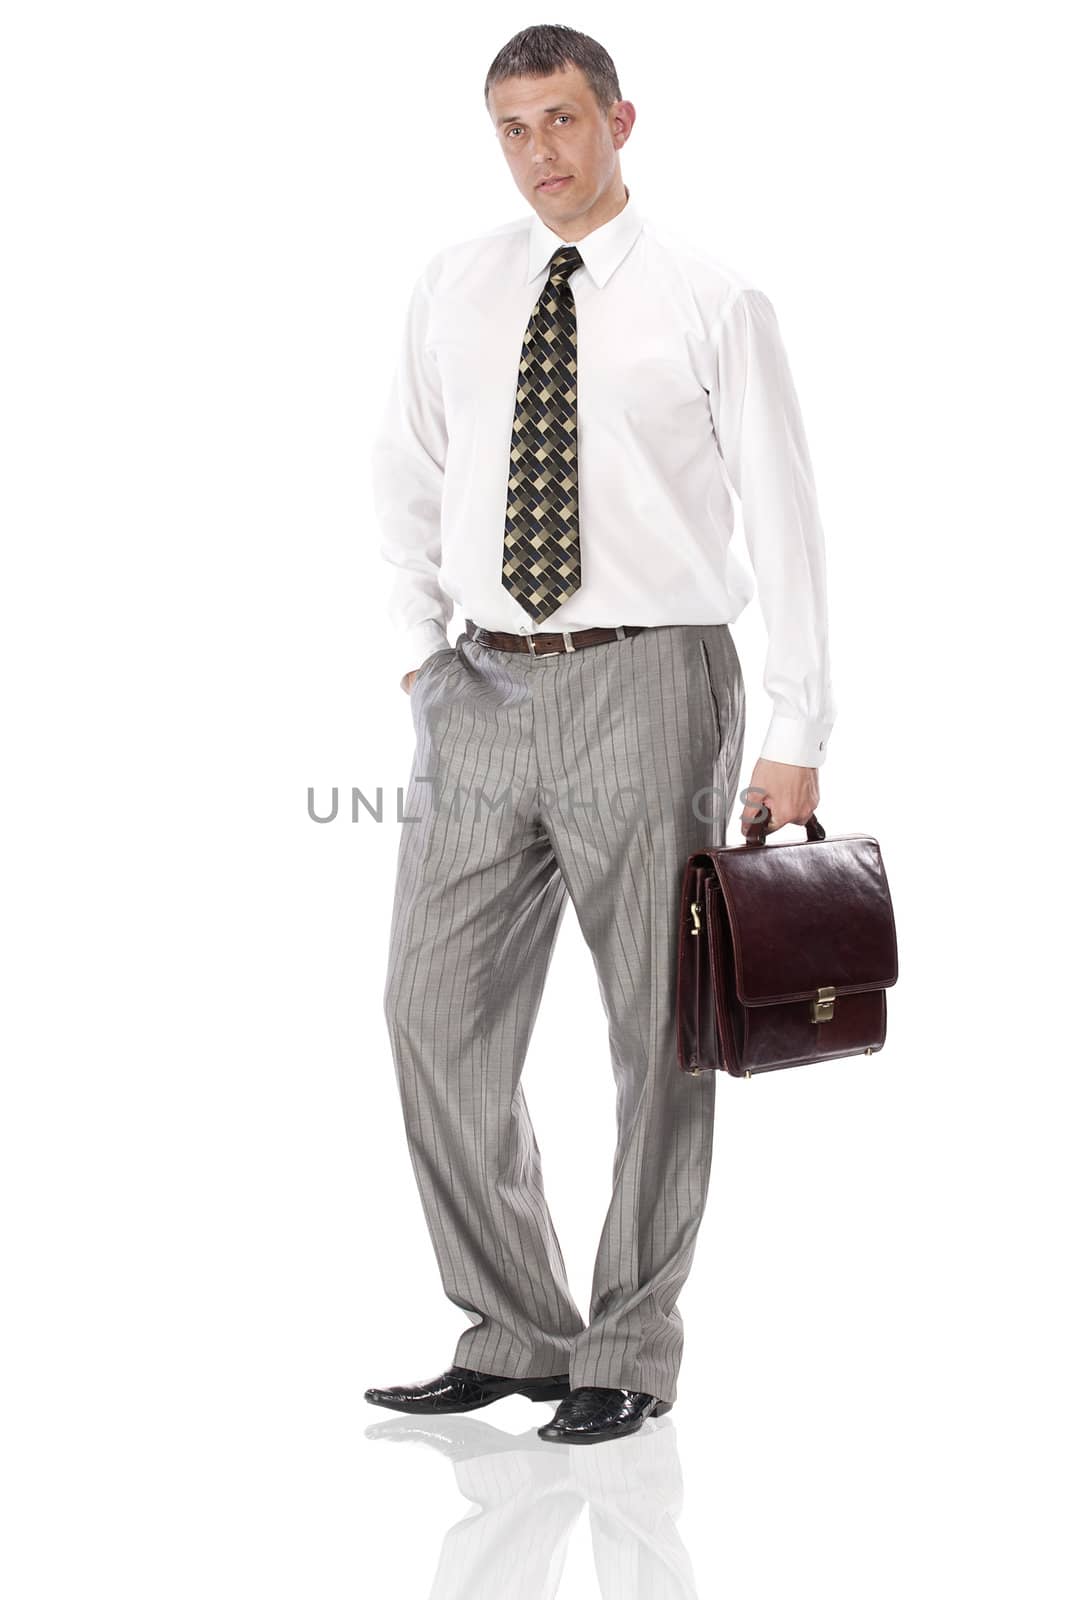 The elegant  businessman  on a white background by sergey150770SV